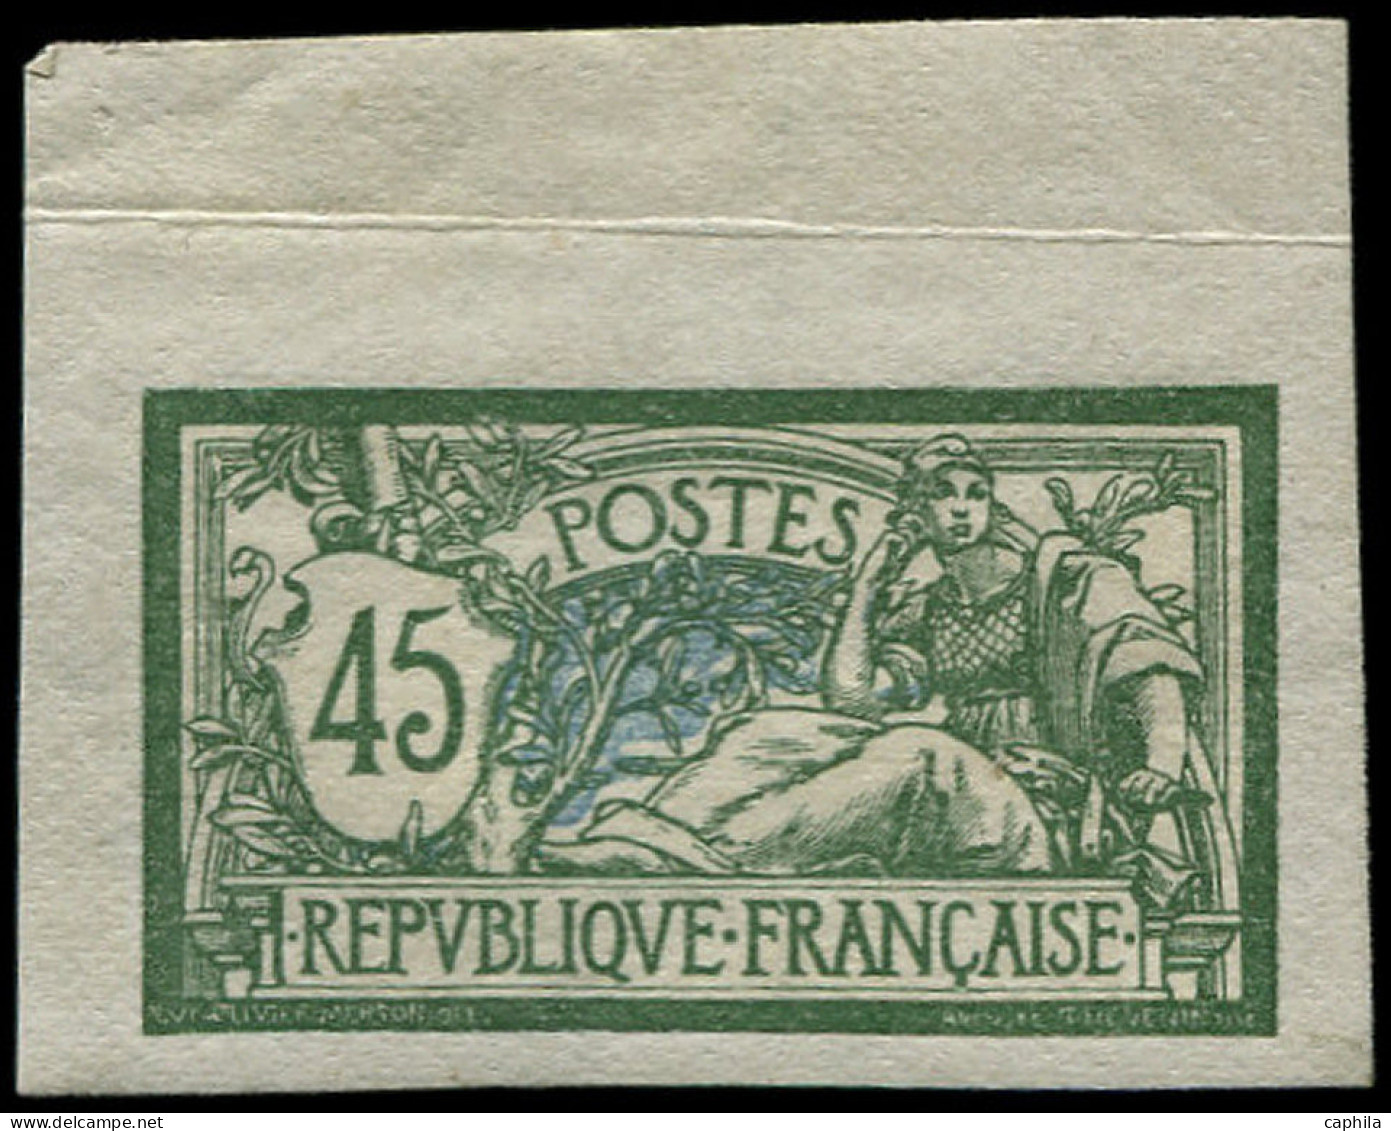 * FRANCE - Poste - 143b, Non Dentelé, Bord De Feuille: 45c. Merson Vert Bleu - Neufs